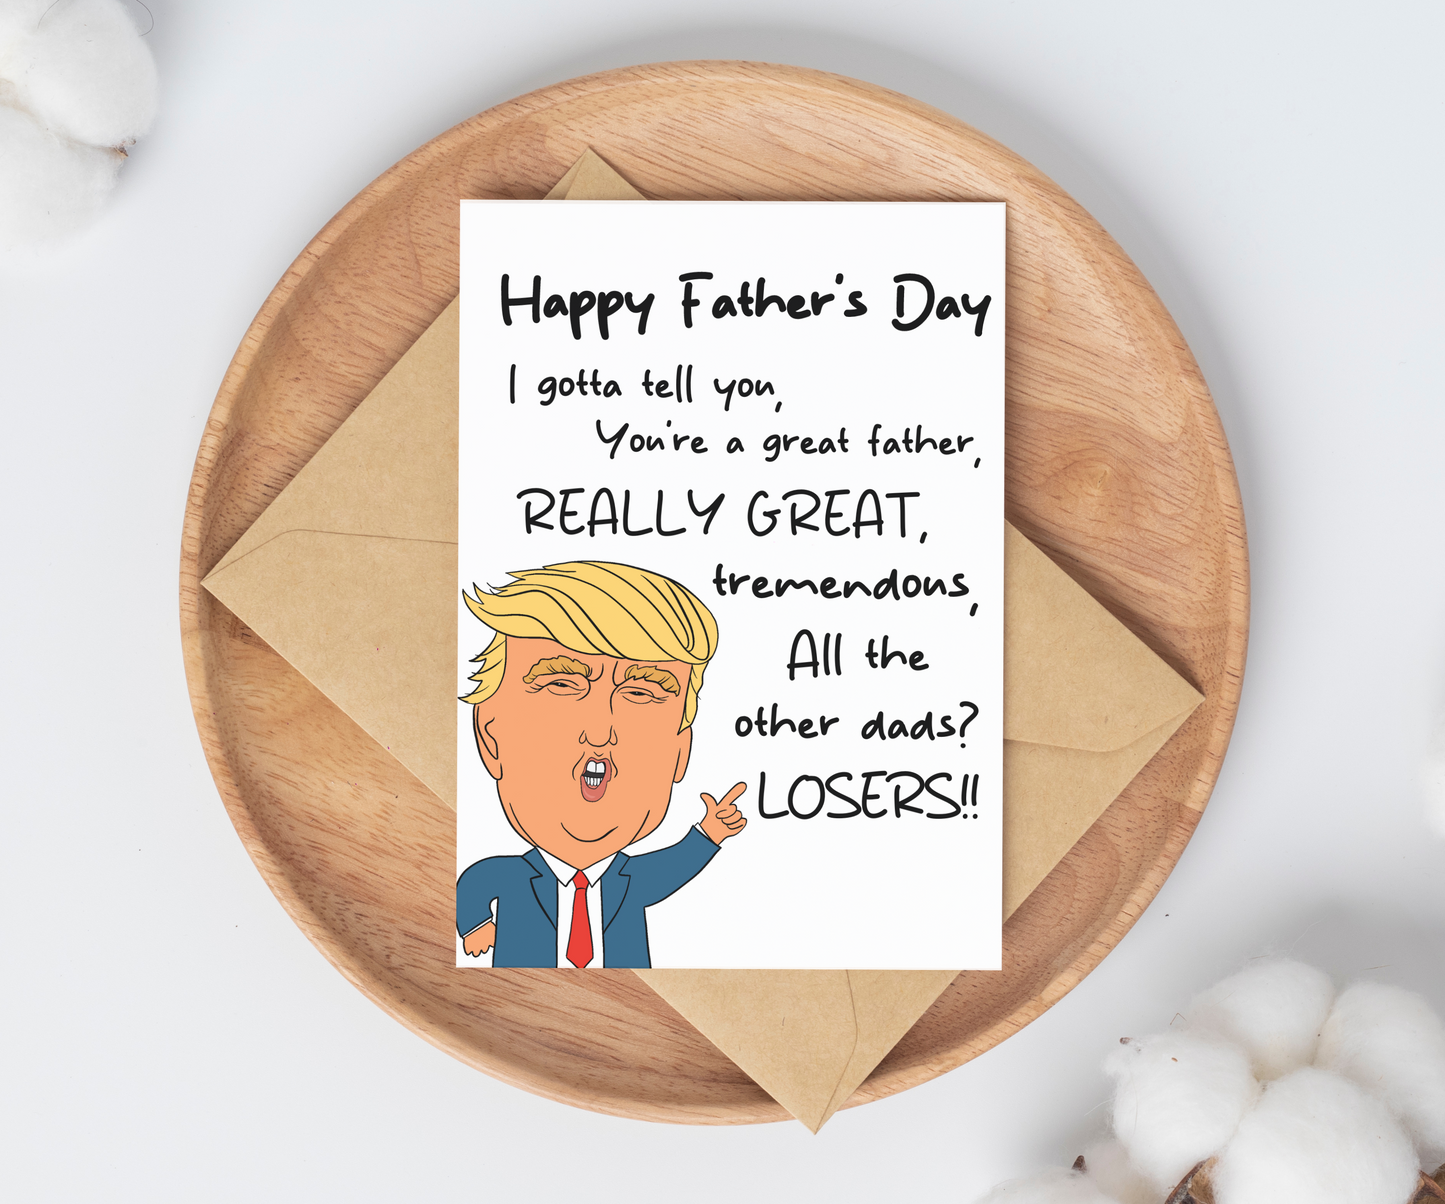 Trump Father's Day Mug